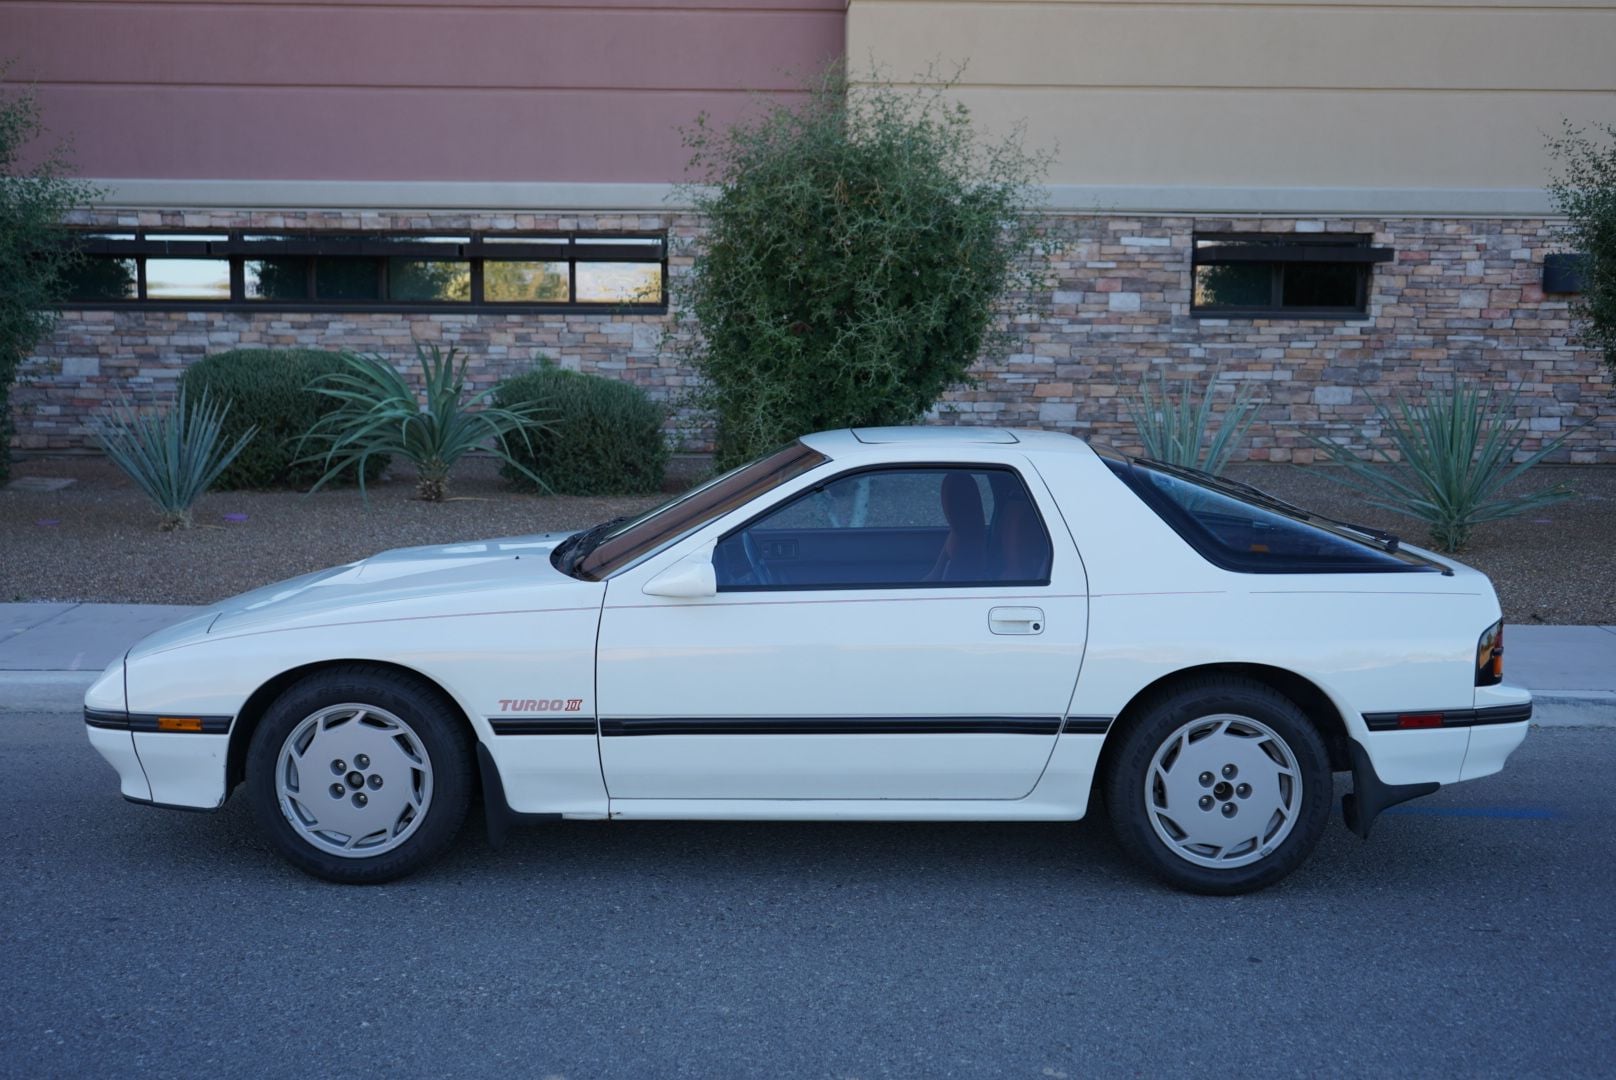 1987 Mazda RX-7 - 1987 Turbo II FOR SALE - Used - VIN JM1FC3329H0157165 - 149,135 Miles - Manual - White - Tucson, AZ 85747, United States